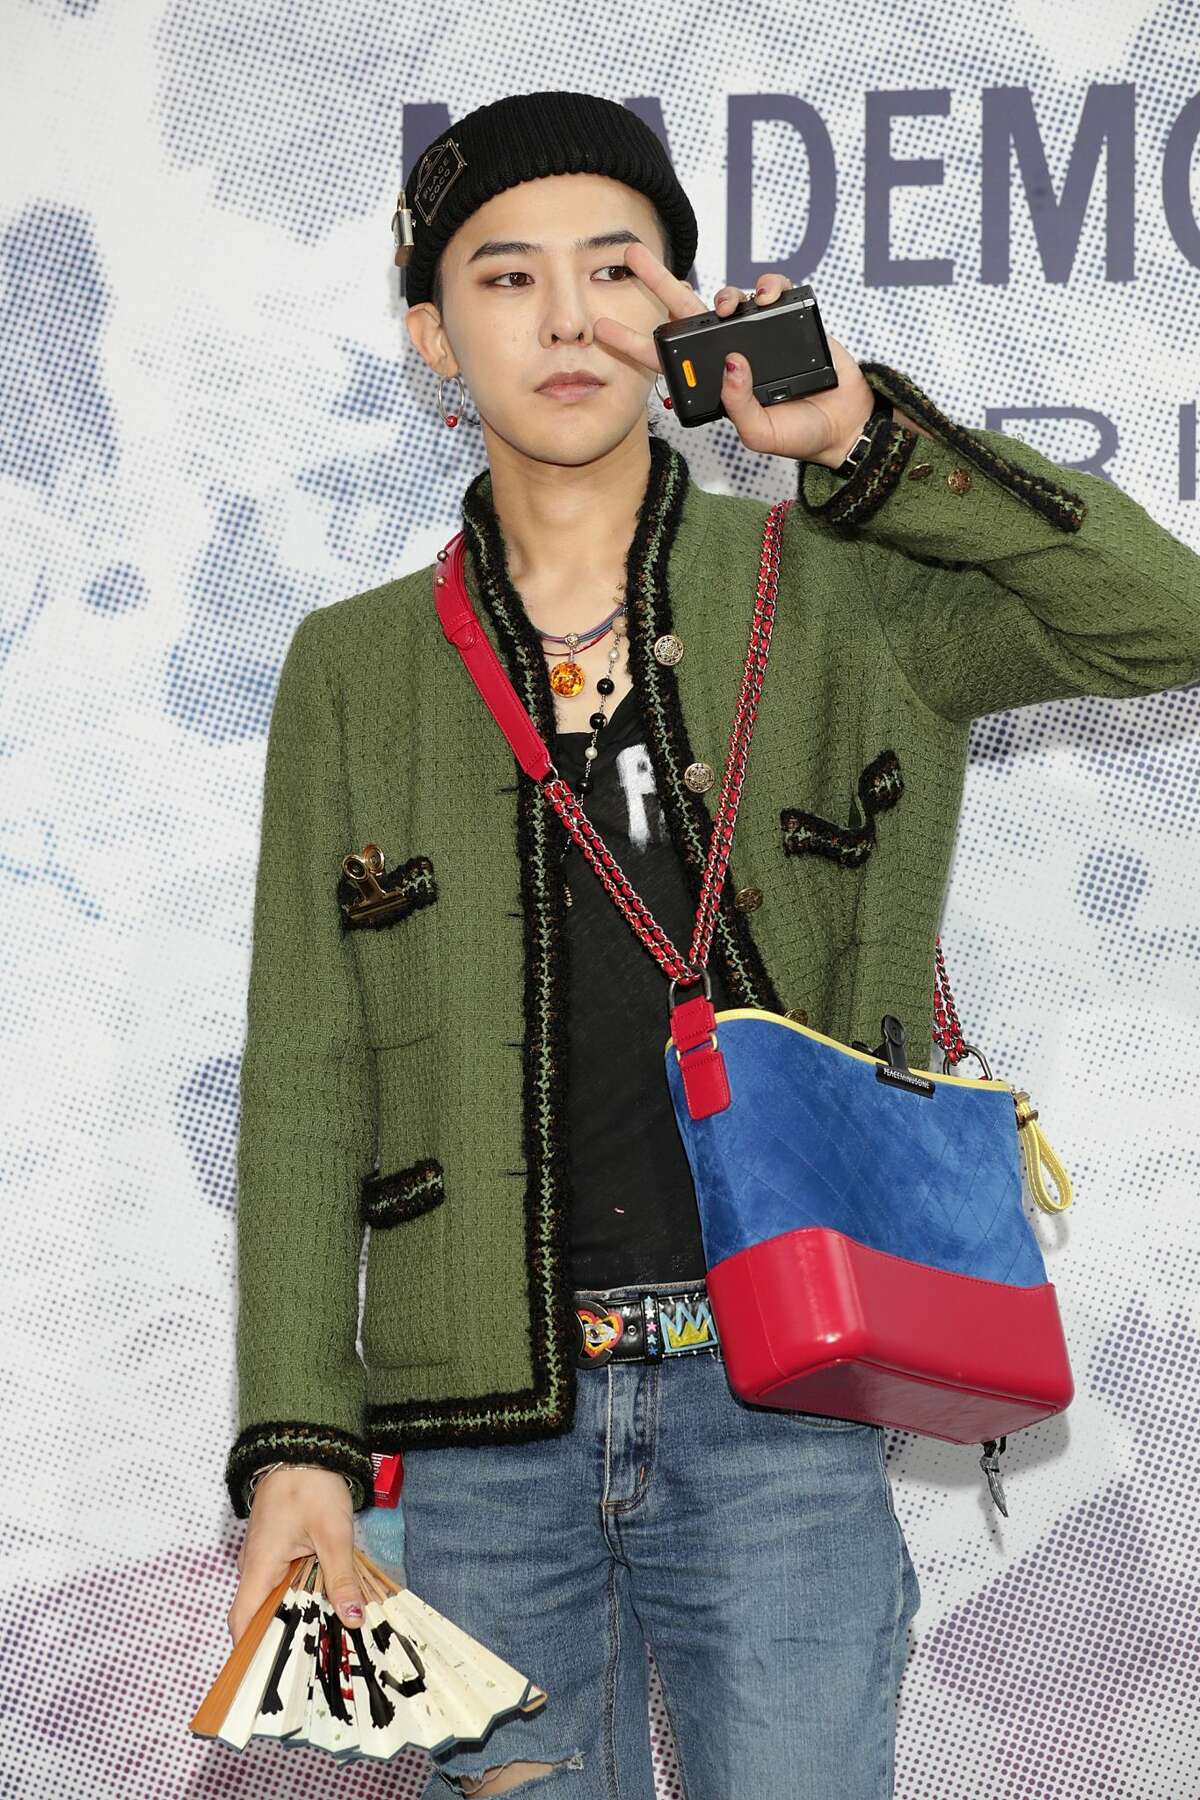 K-pop star G-Dragon explores celebrity, identity at Houston show